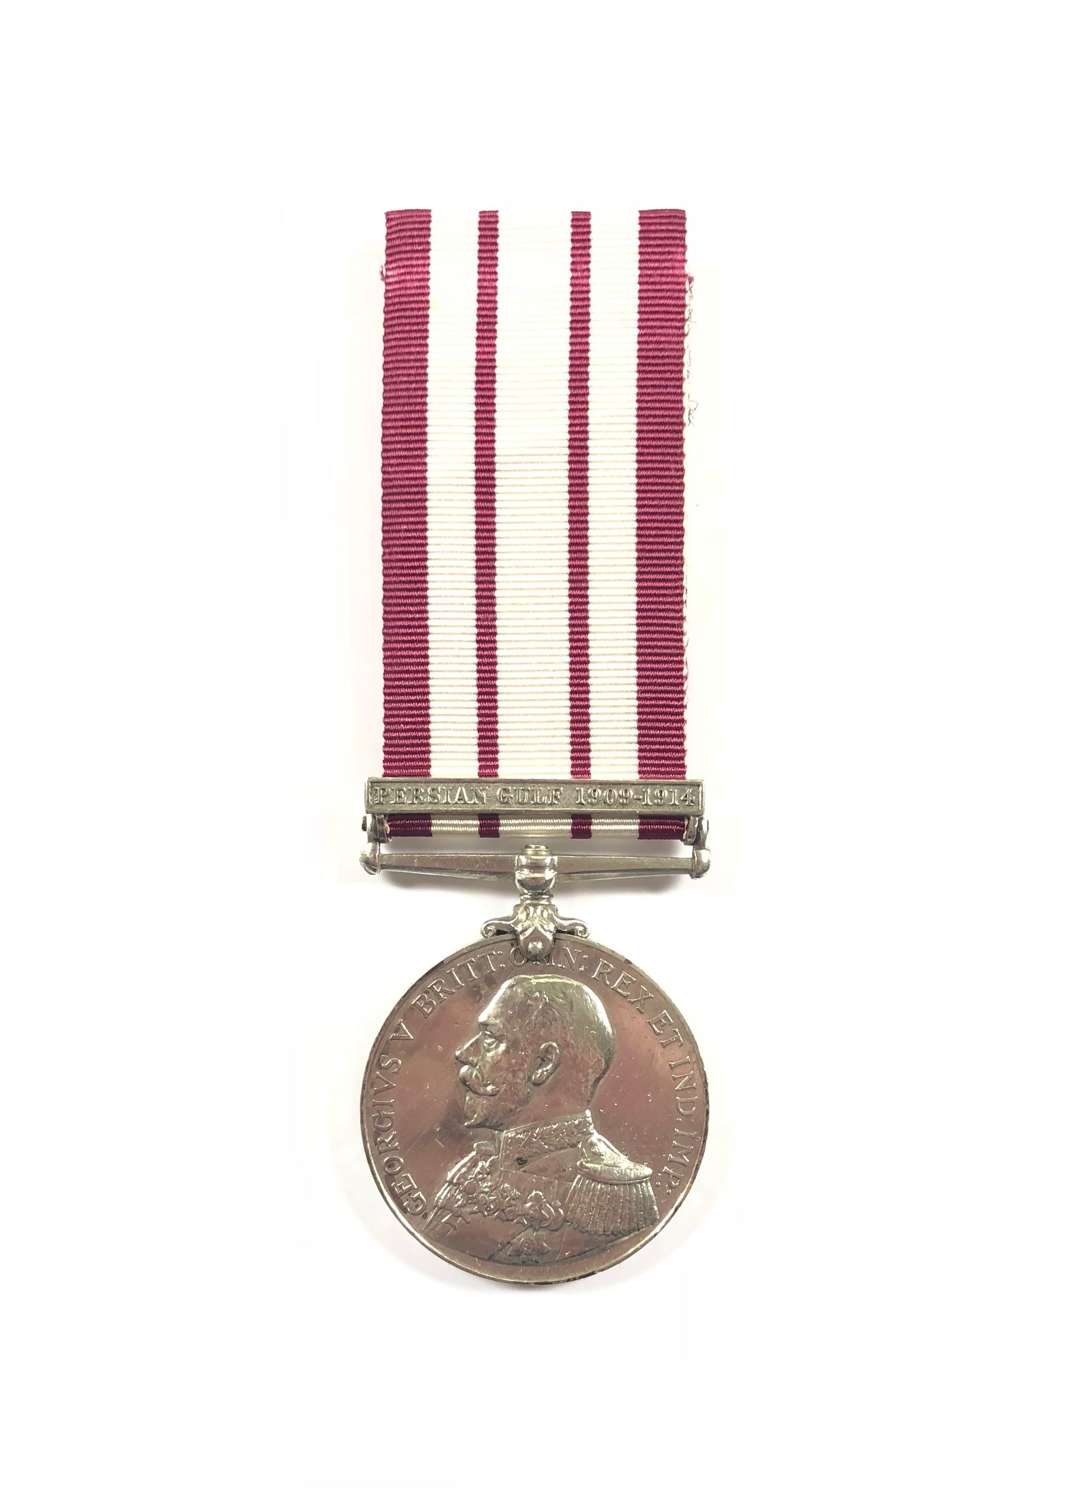 Royal Navy Naval General Service Medal, clasp “Persian Gulf 1909-1914”